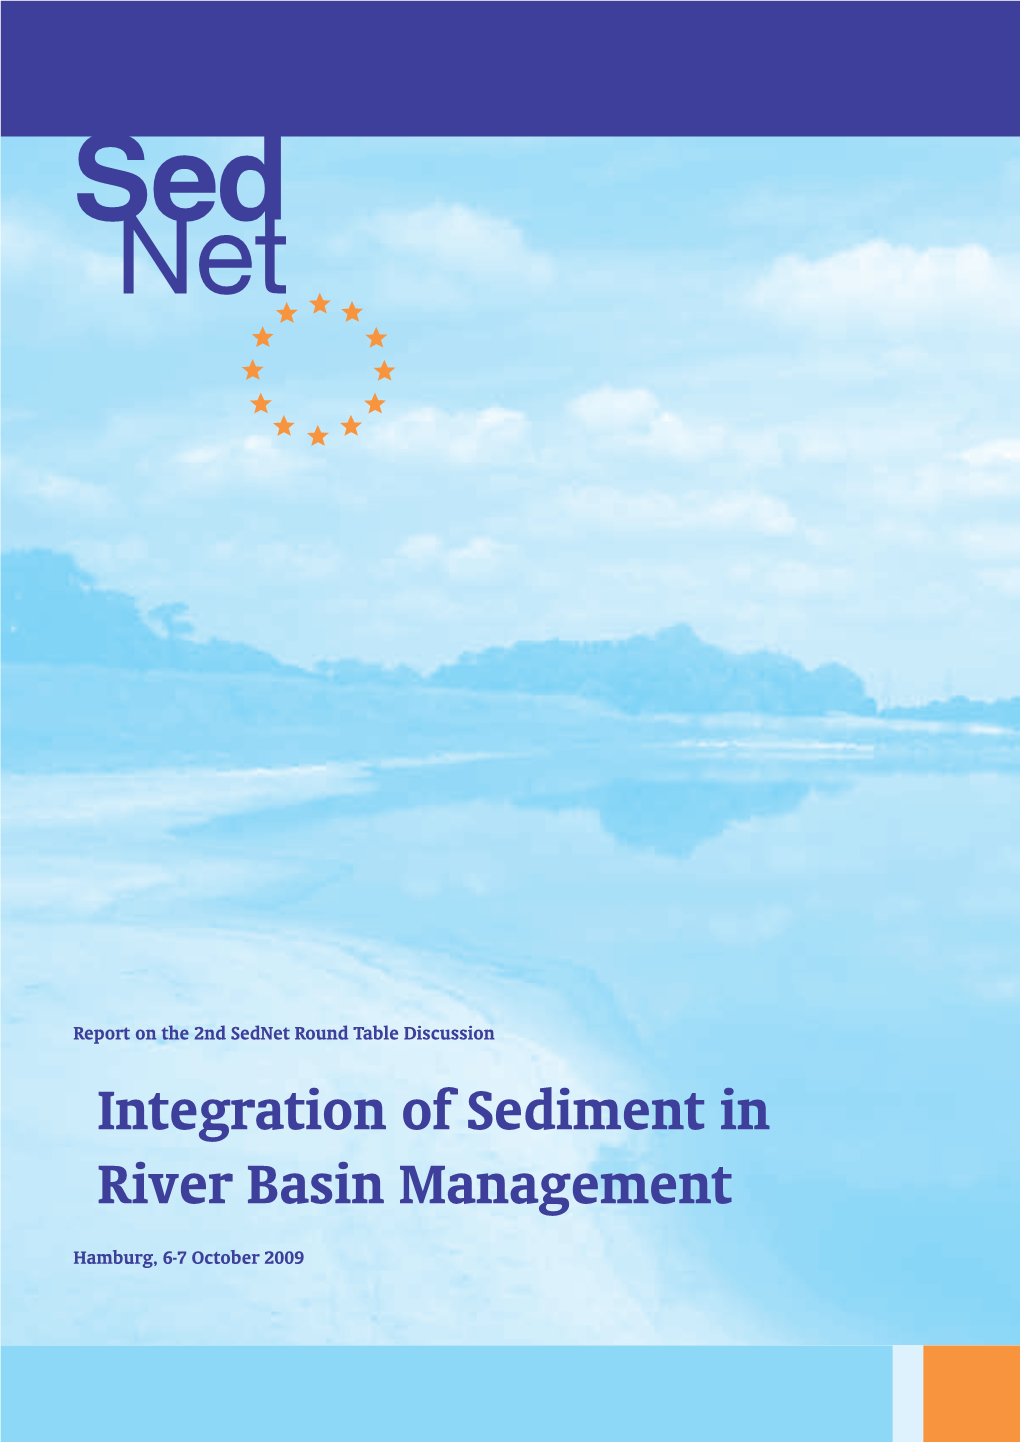 River Basin Sediment Management